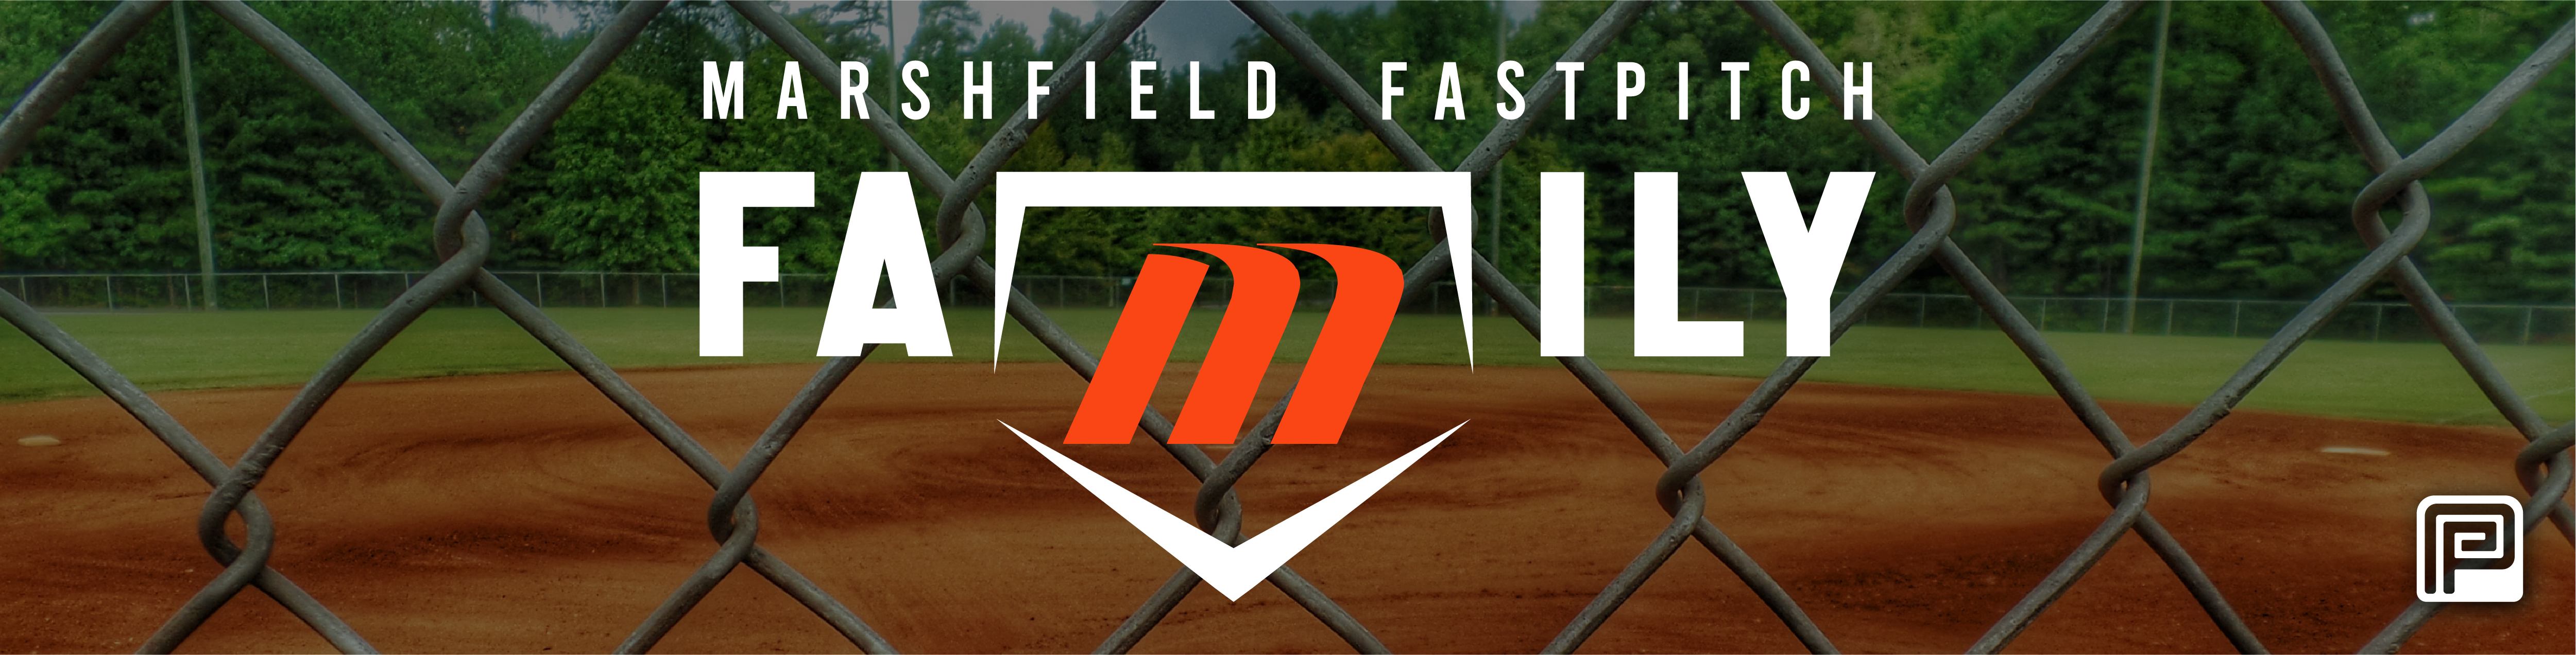 Marshfield fast pitch banner